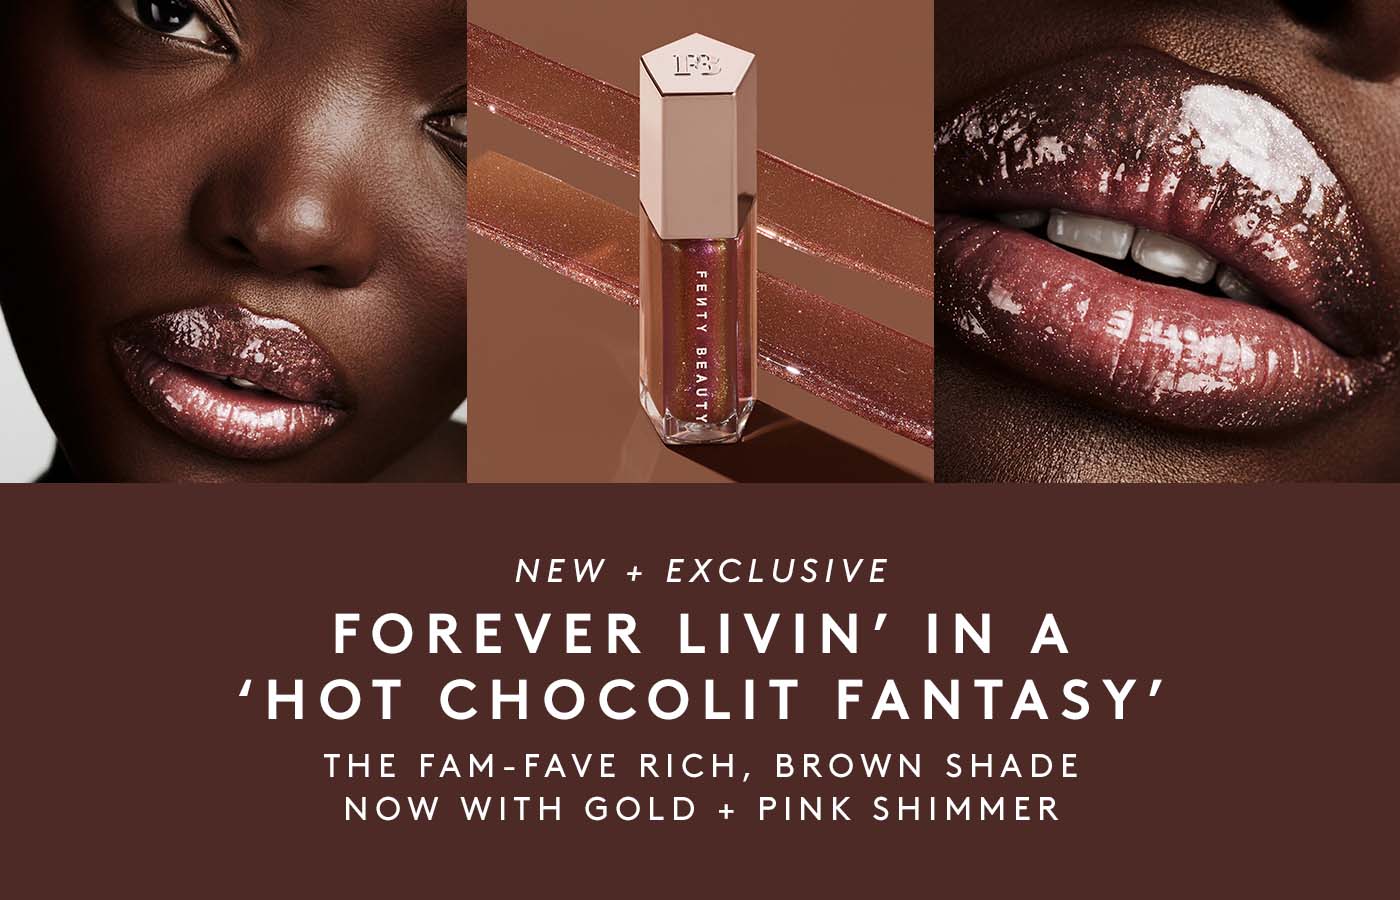 USA Cosmetics - Fenty Beauty Full Size Liquid Lipsticks